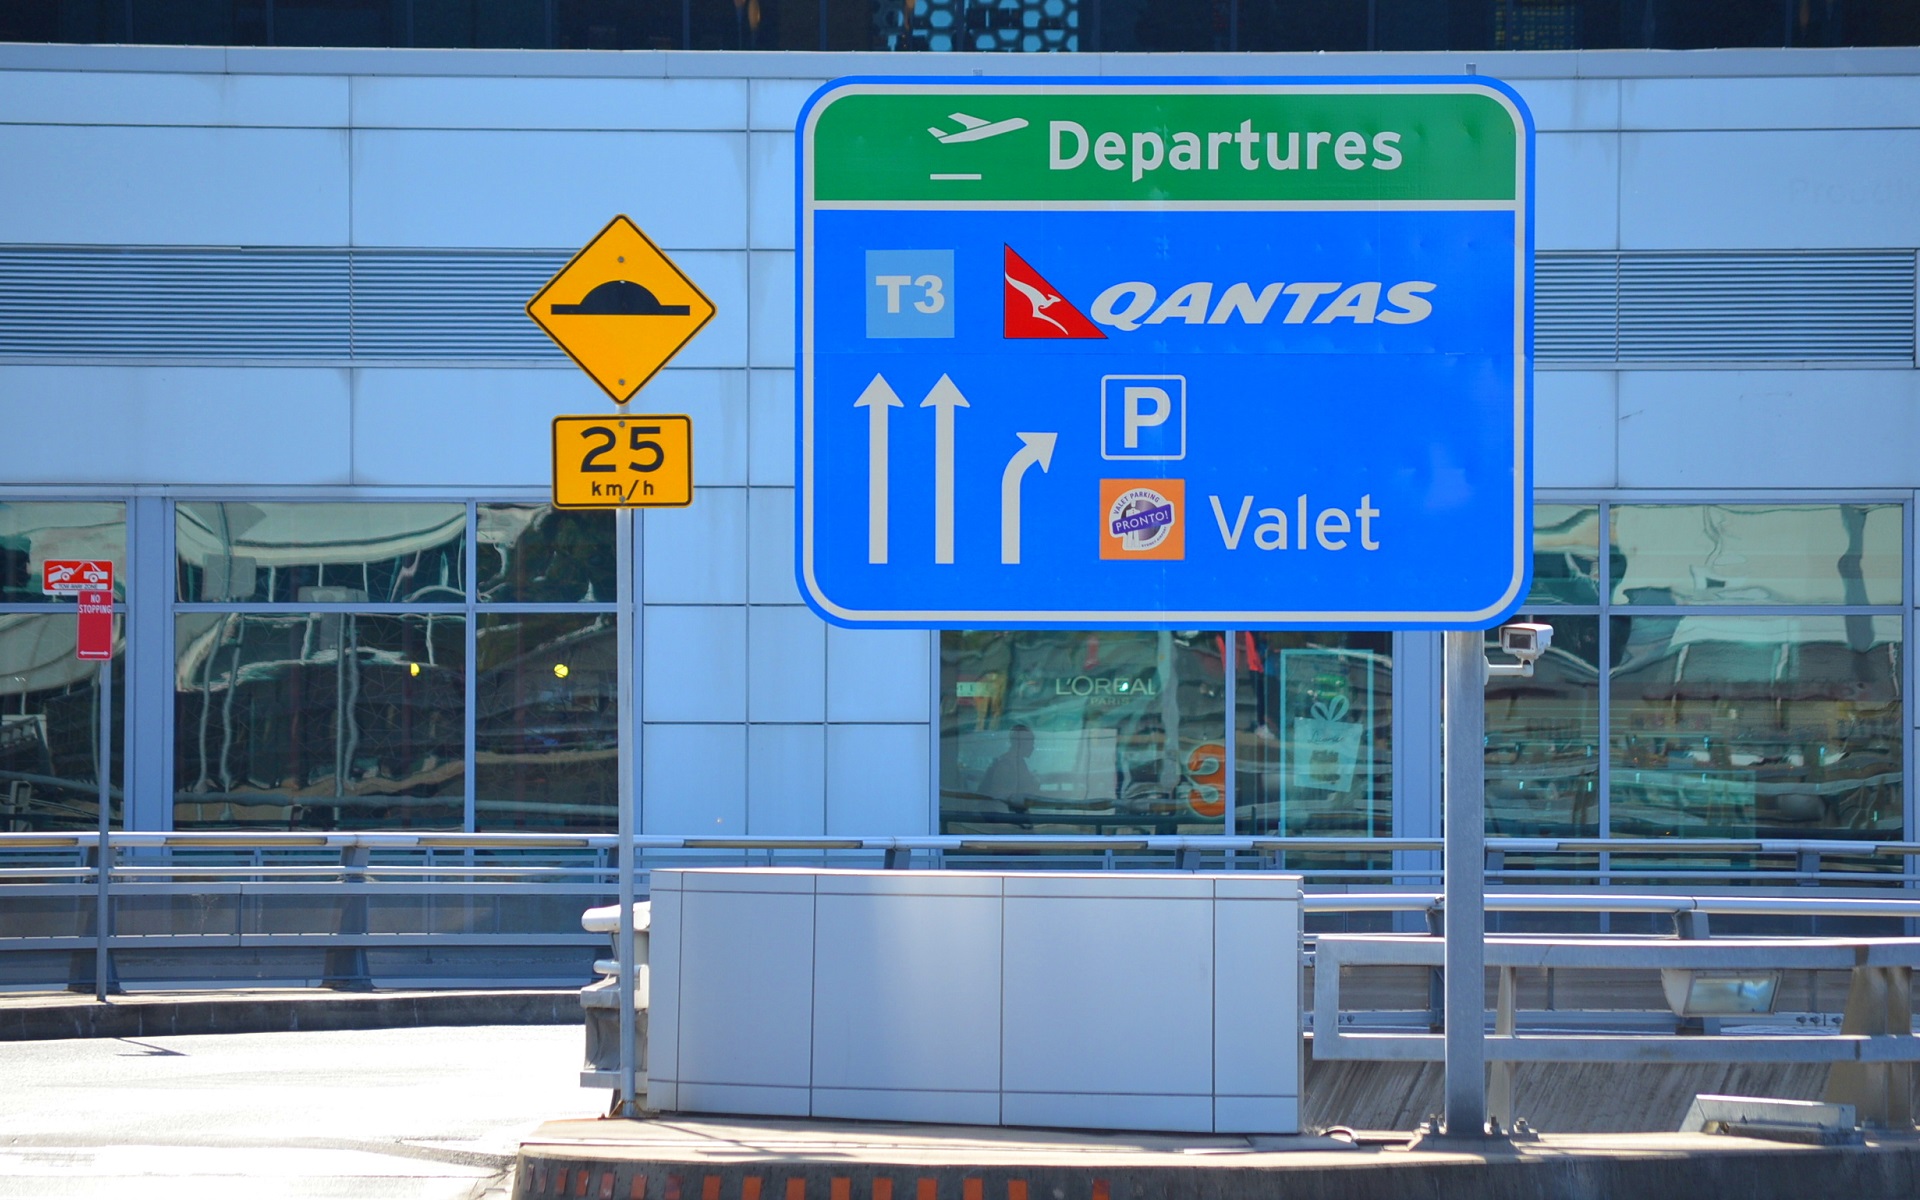 Sydney Airport Australia by lonewolf6738